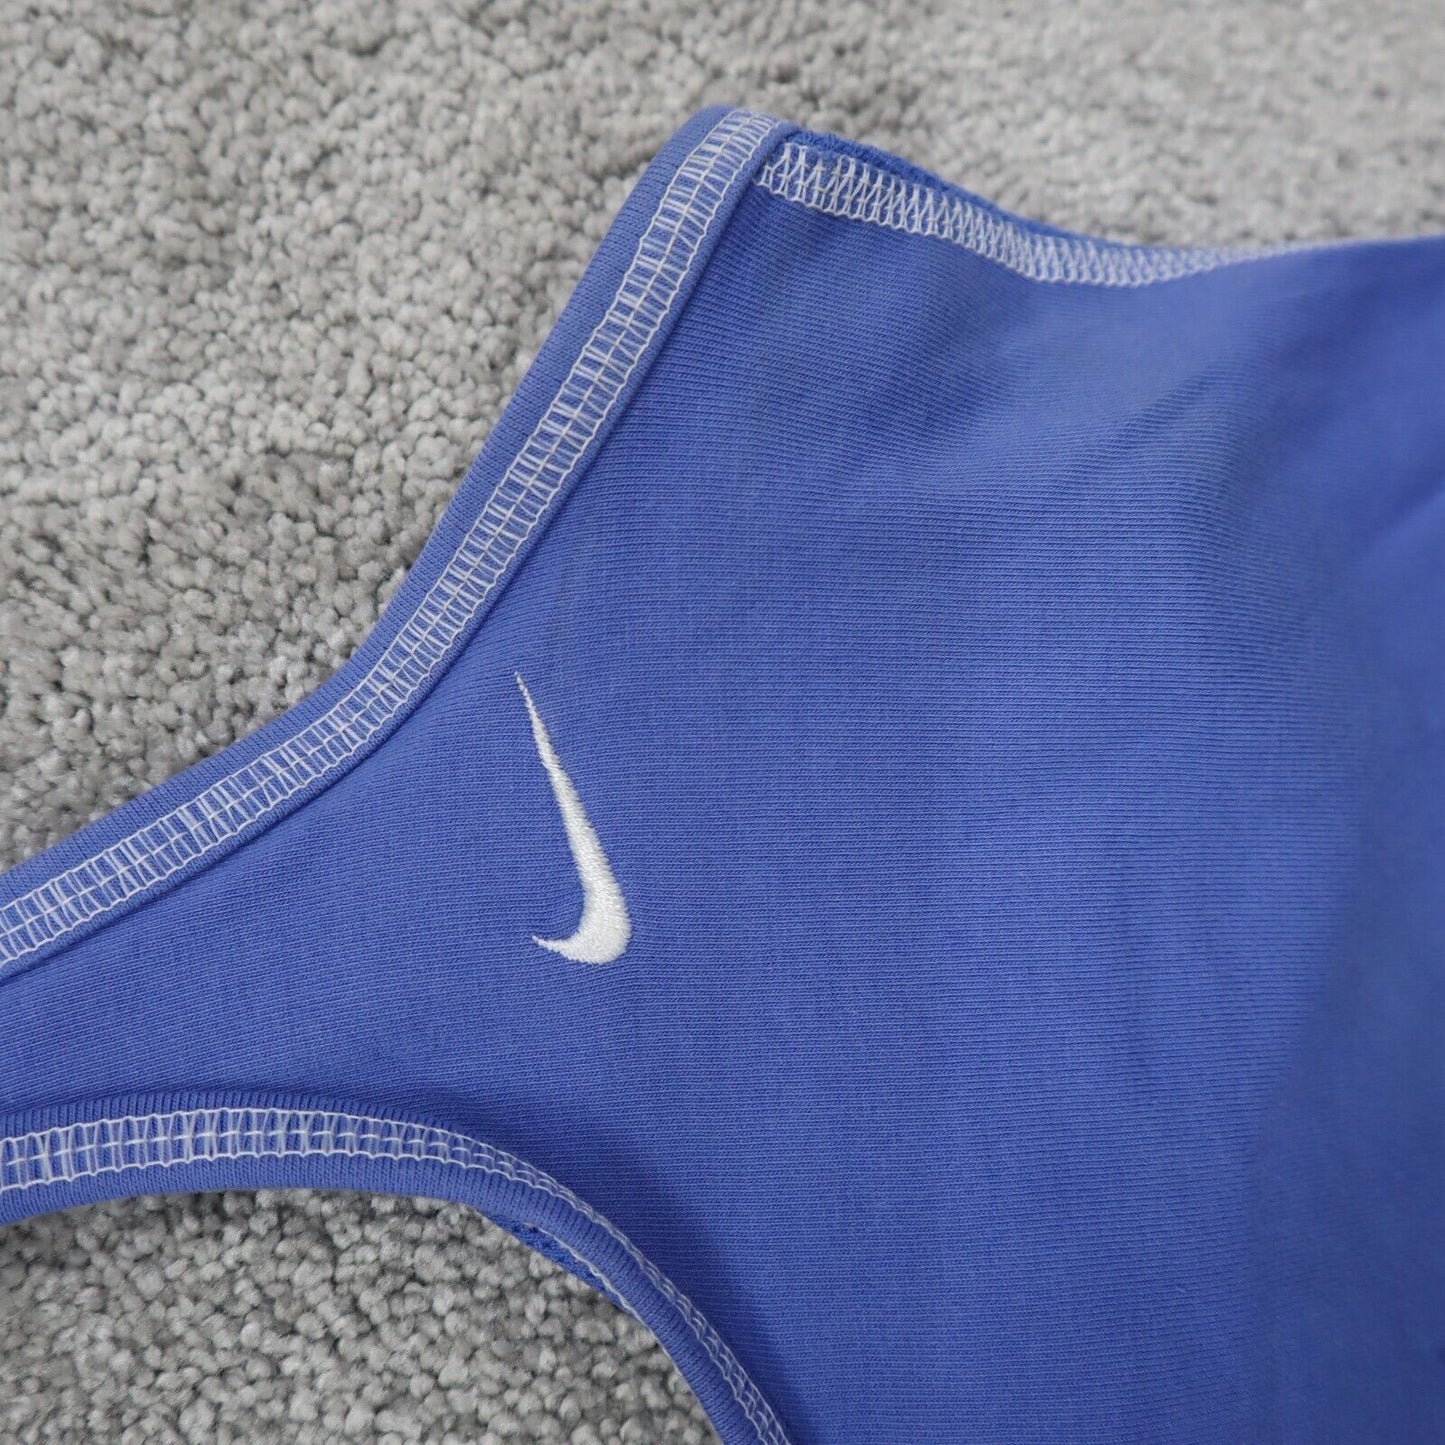 Nike Women Dri Fit Tank Top Pull Over Running Jogging Logo Blue Size Medium